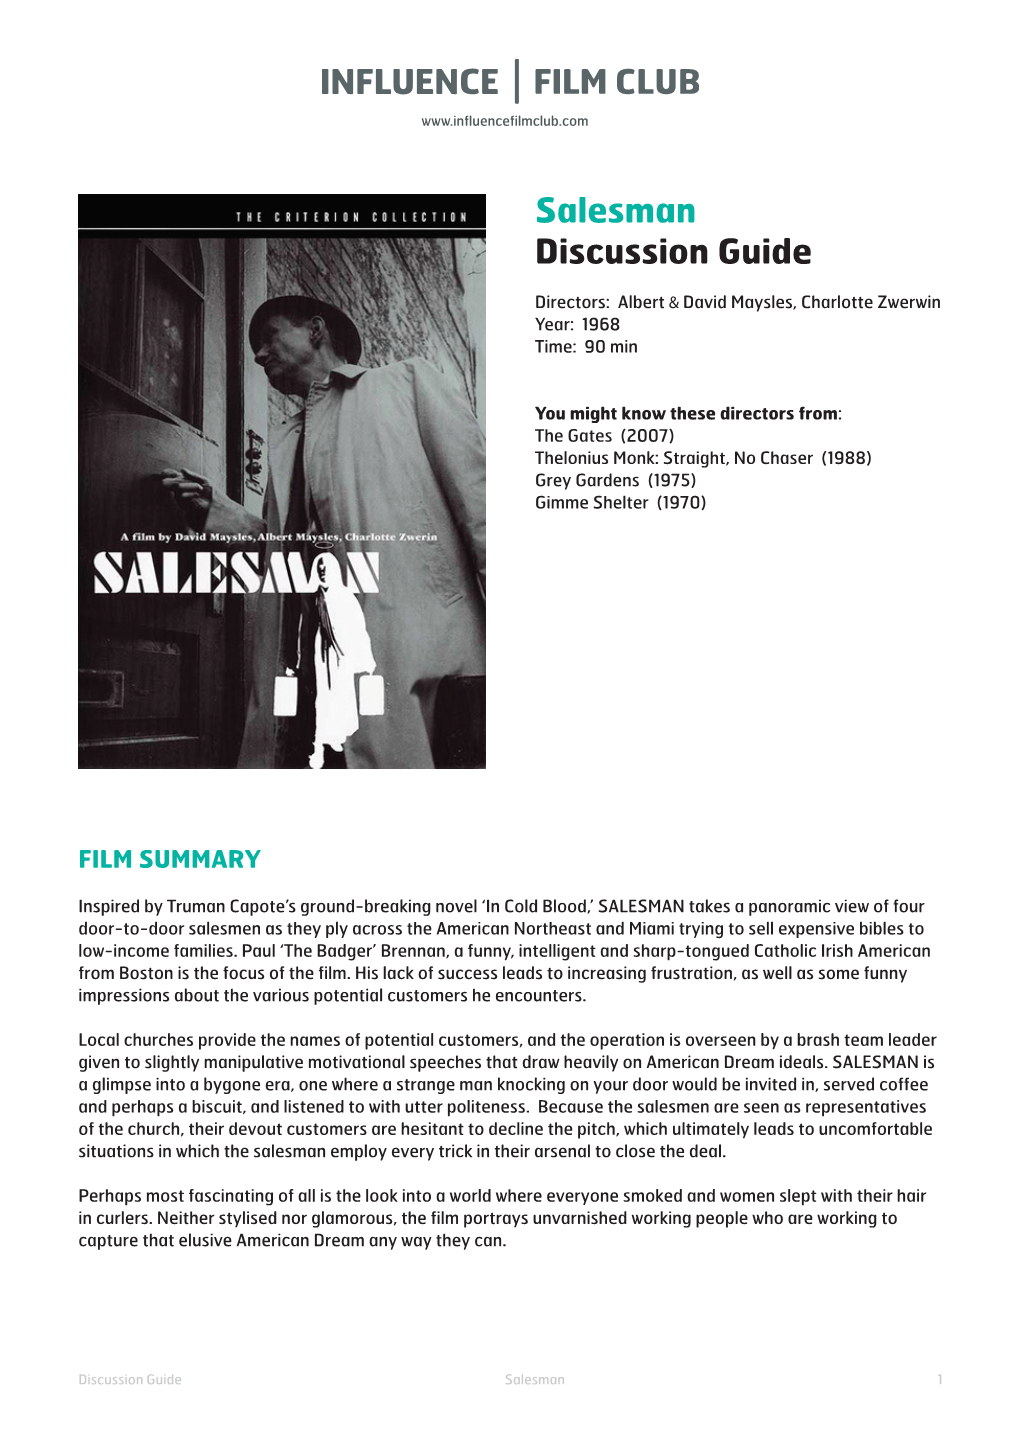 Salesman Discussion Guide